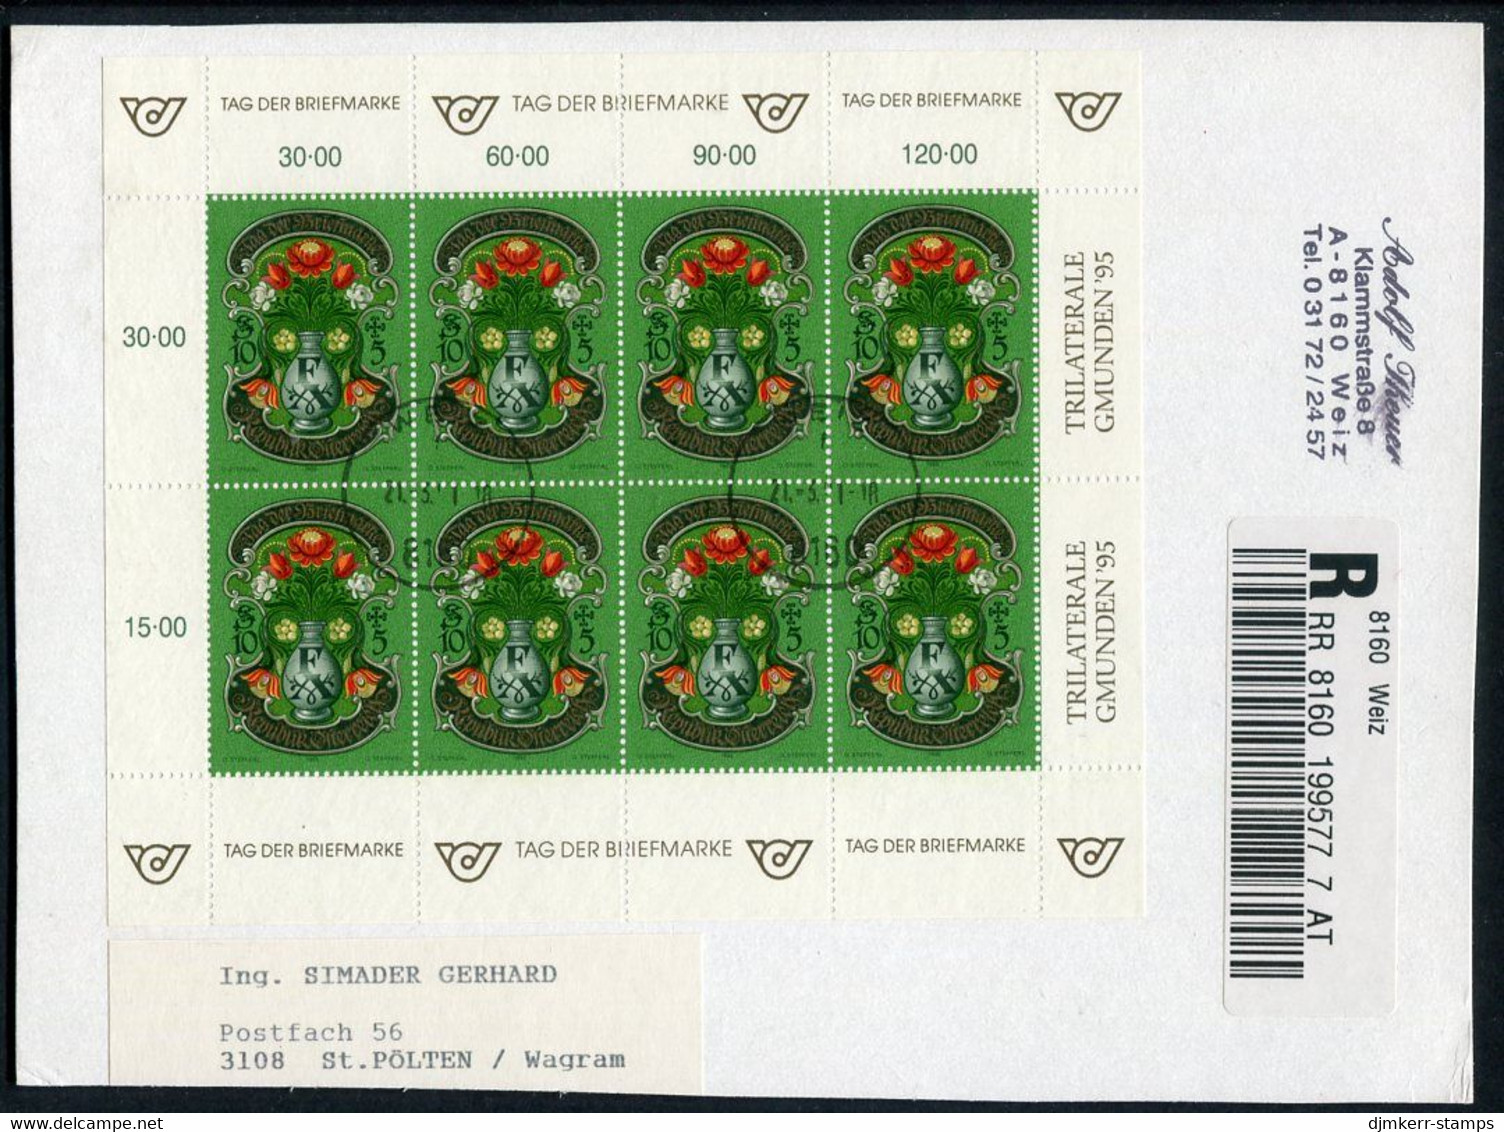 AUSTRIA 1995 Stamp Day Sheetlet, Postally Used On Registered Card.  Michel 2158 Kb - Blocs & Feuillets